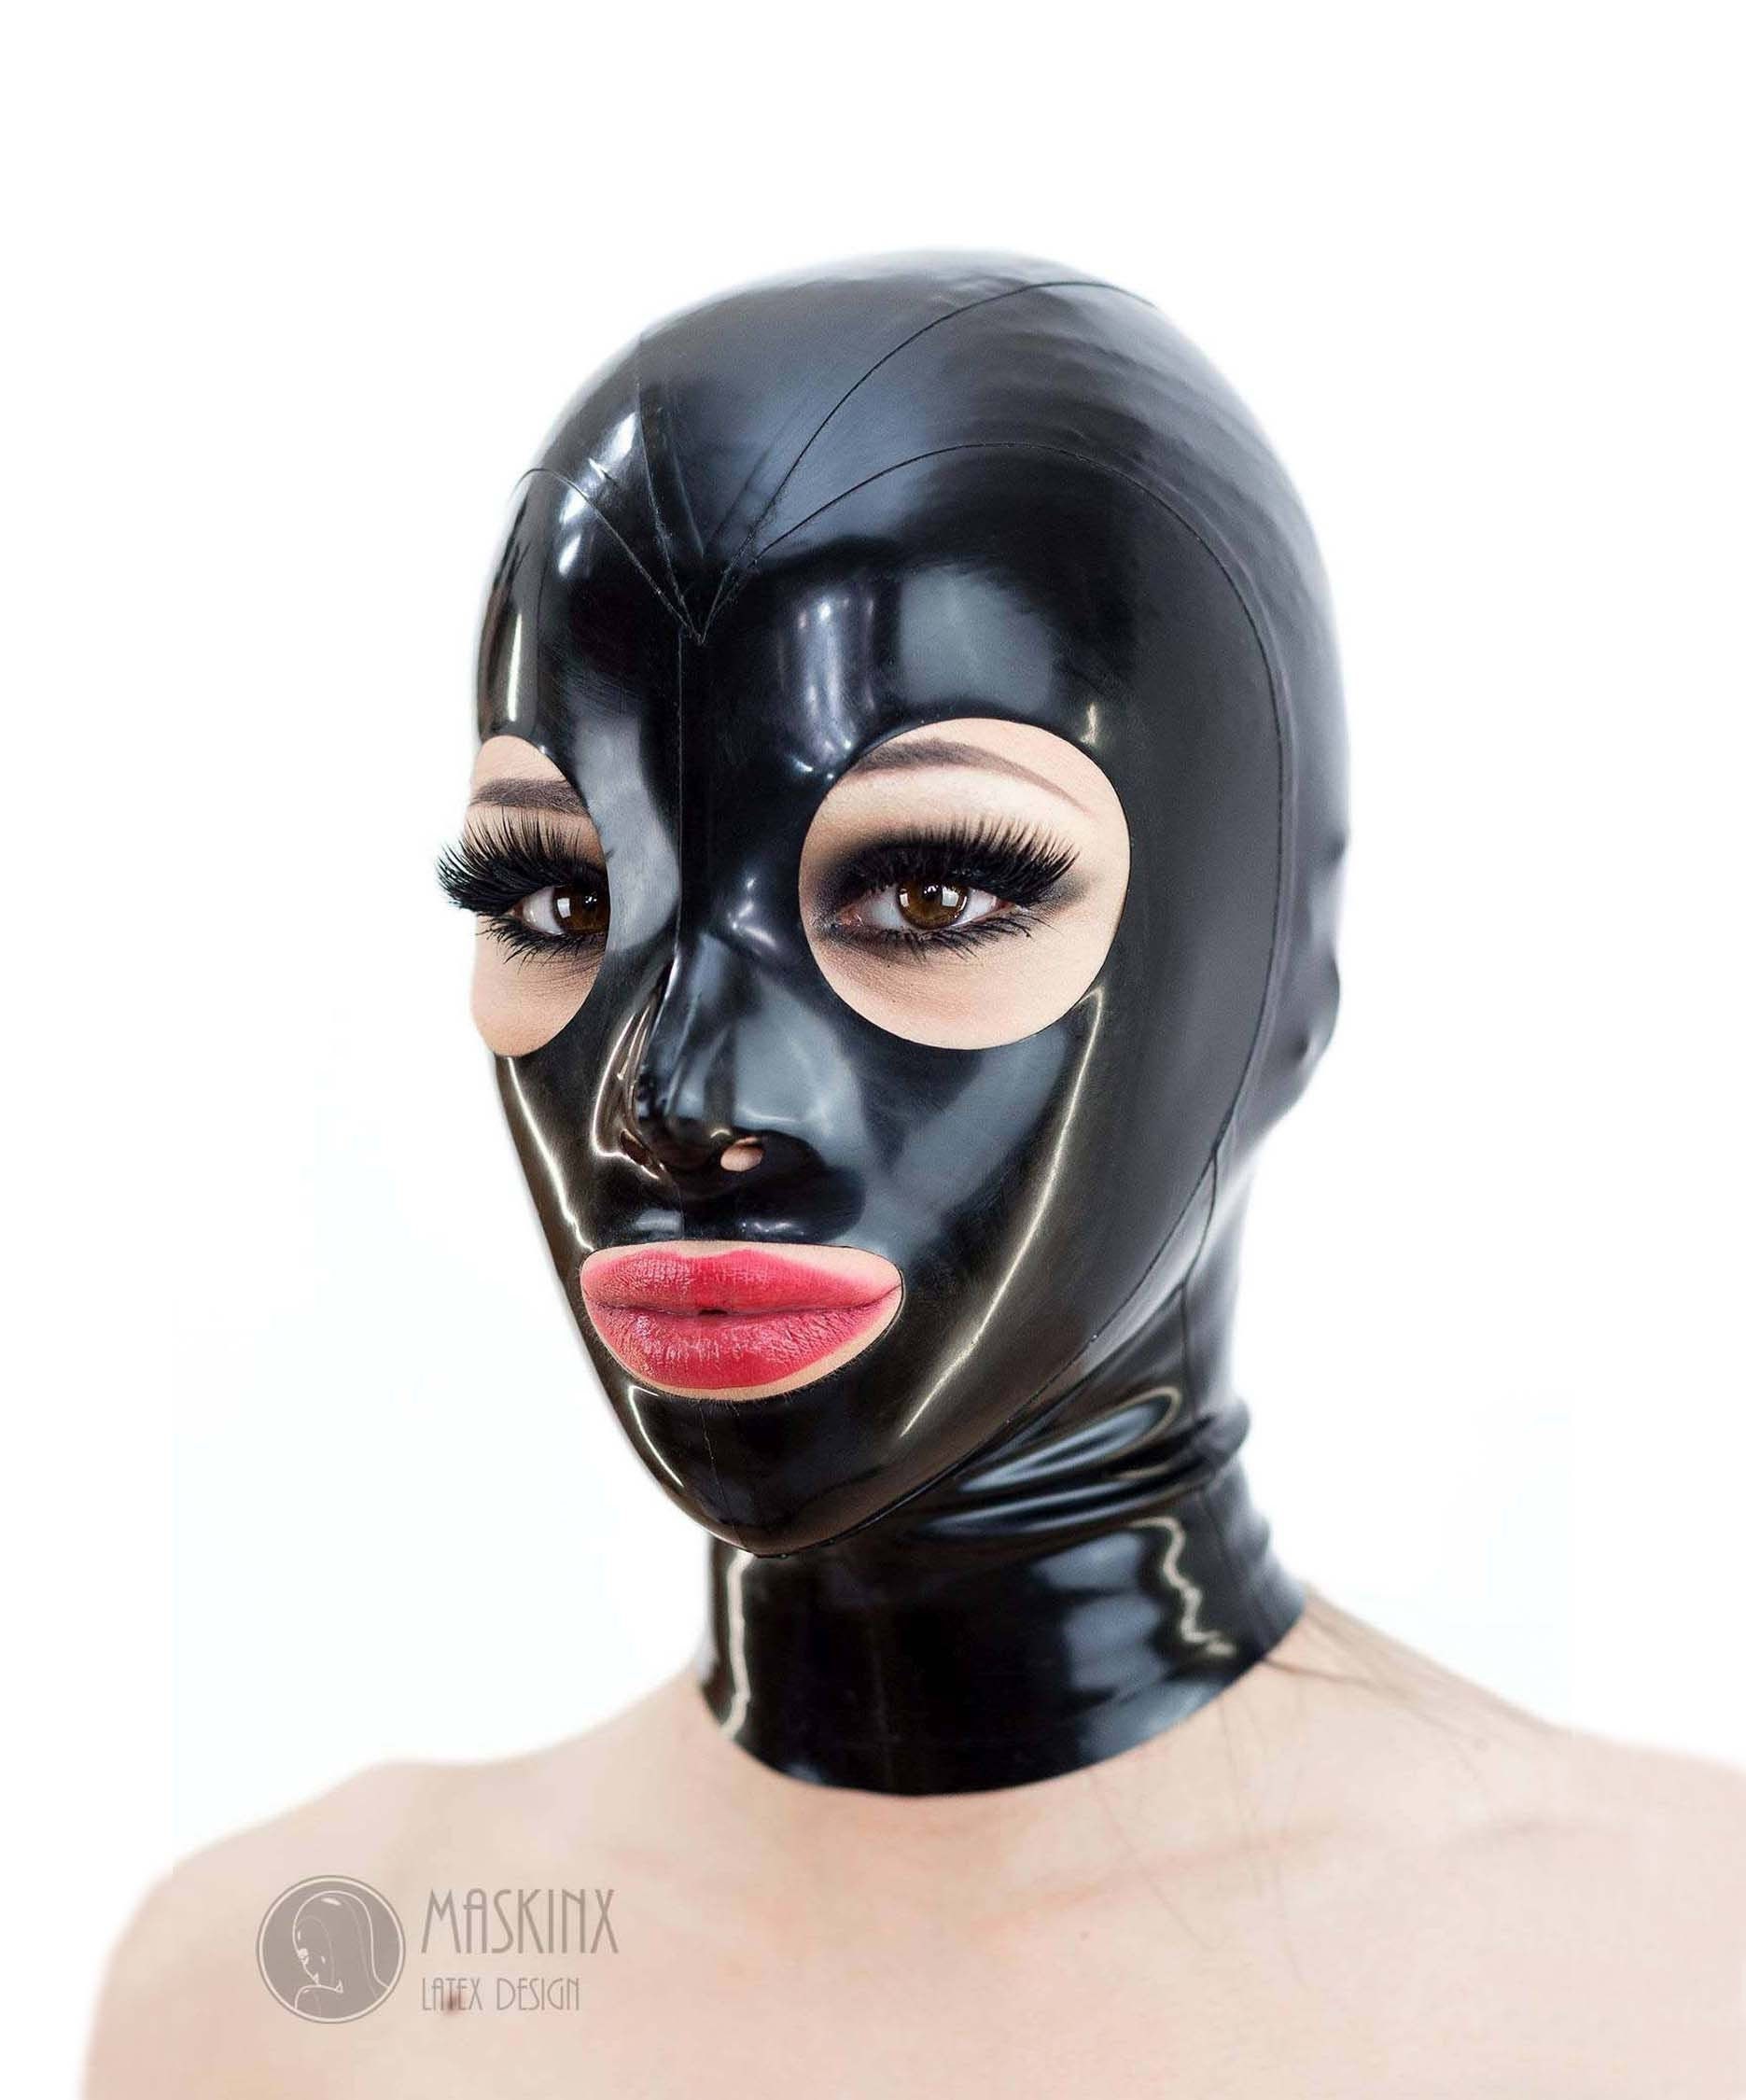 Masque de cagoule en caoutchouc latex noir / blanc fetish wear roleplay  sissy cosplay -  France